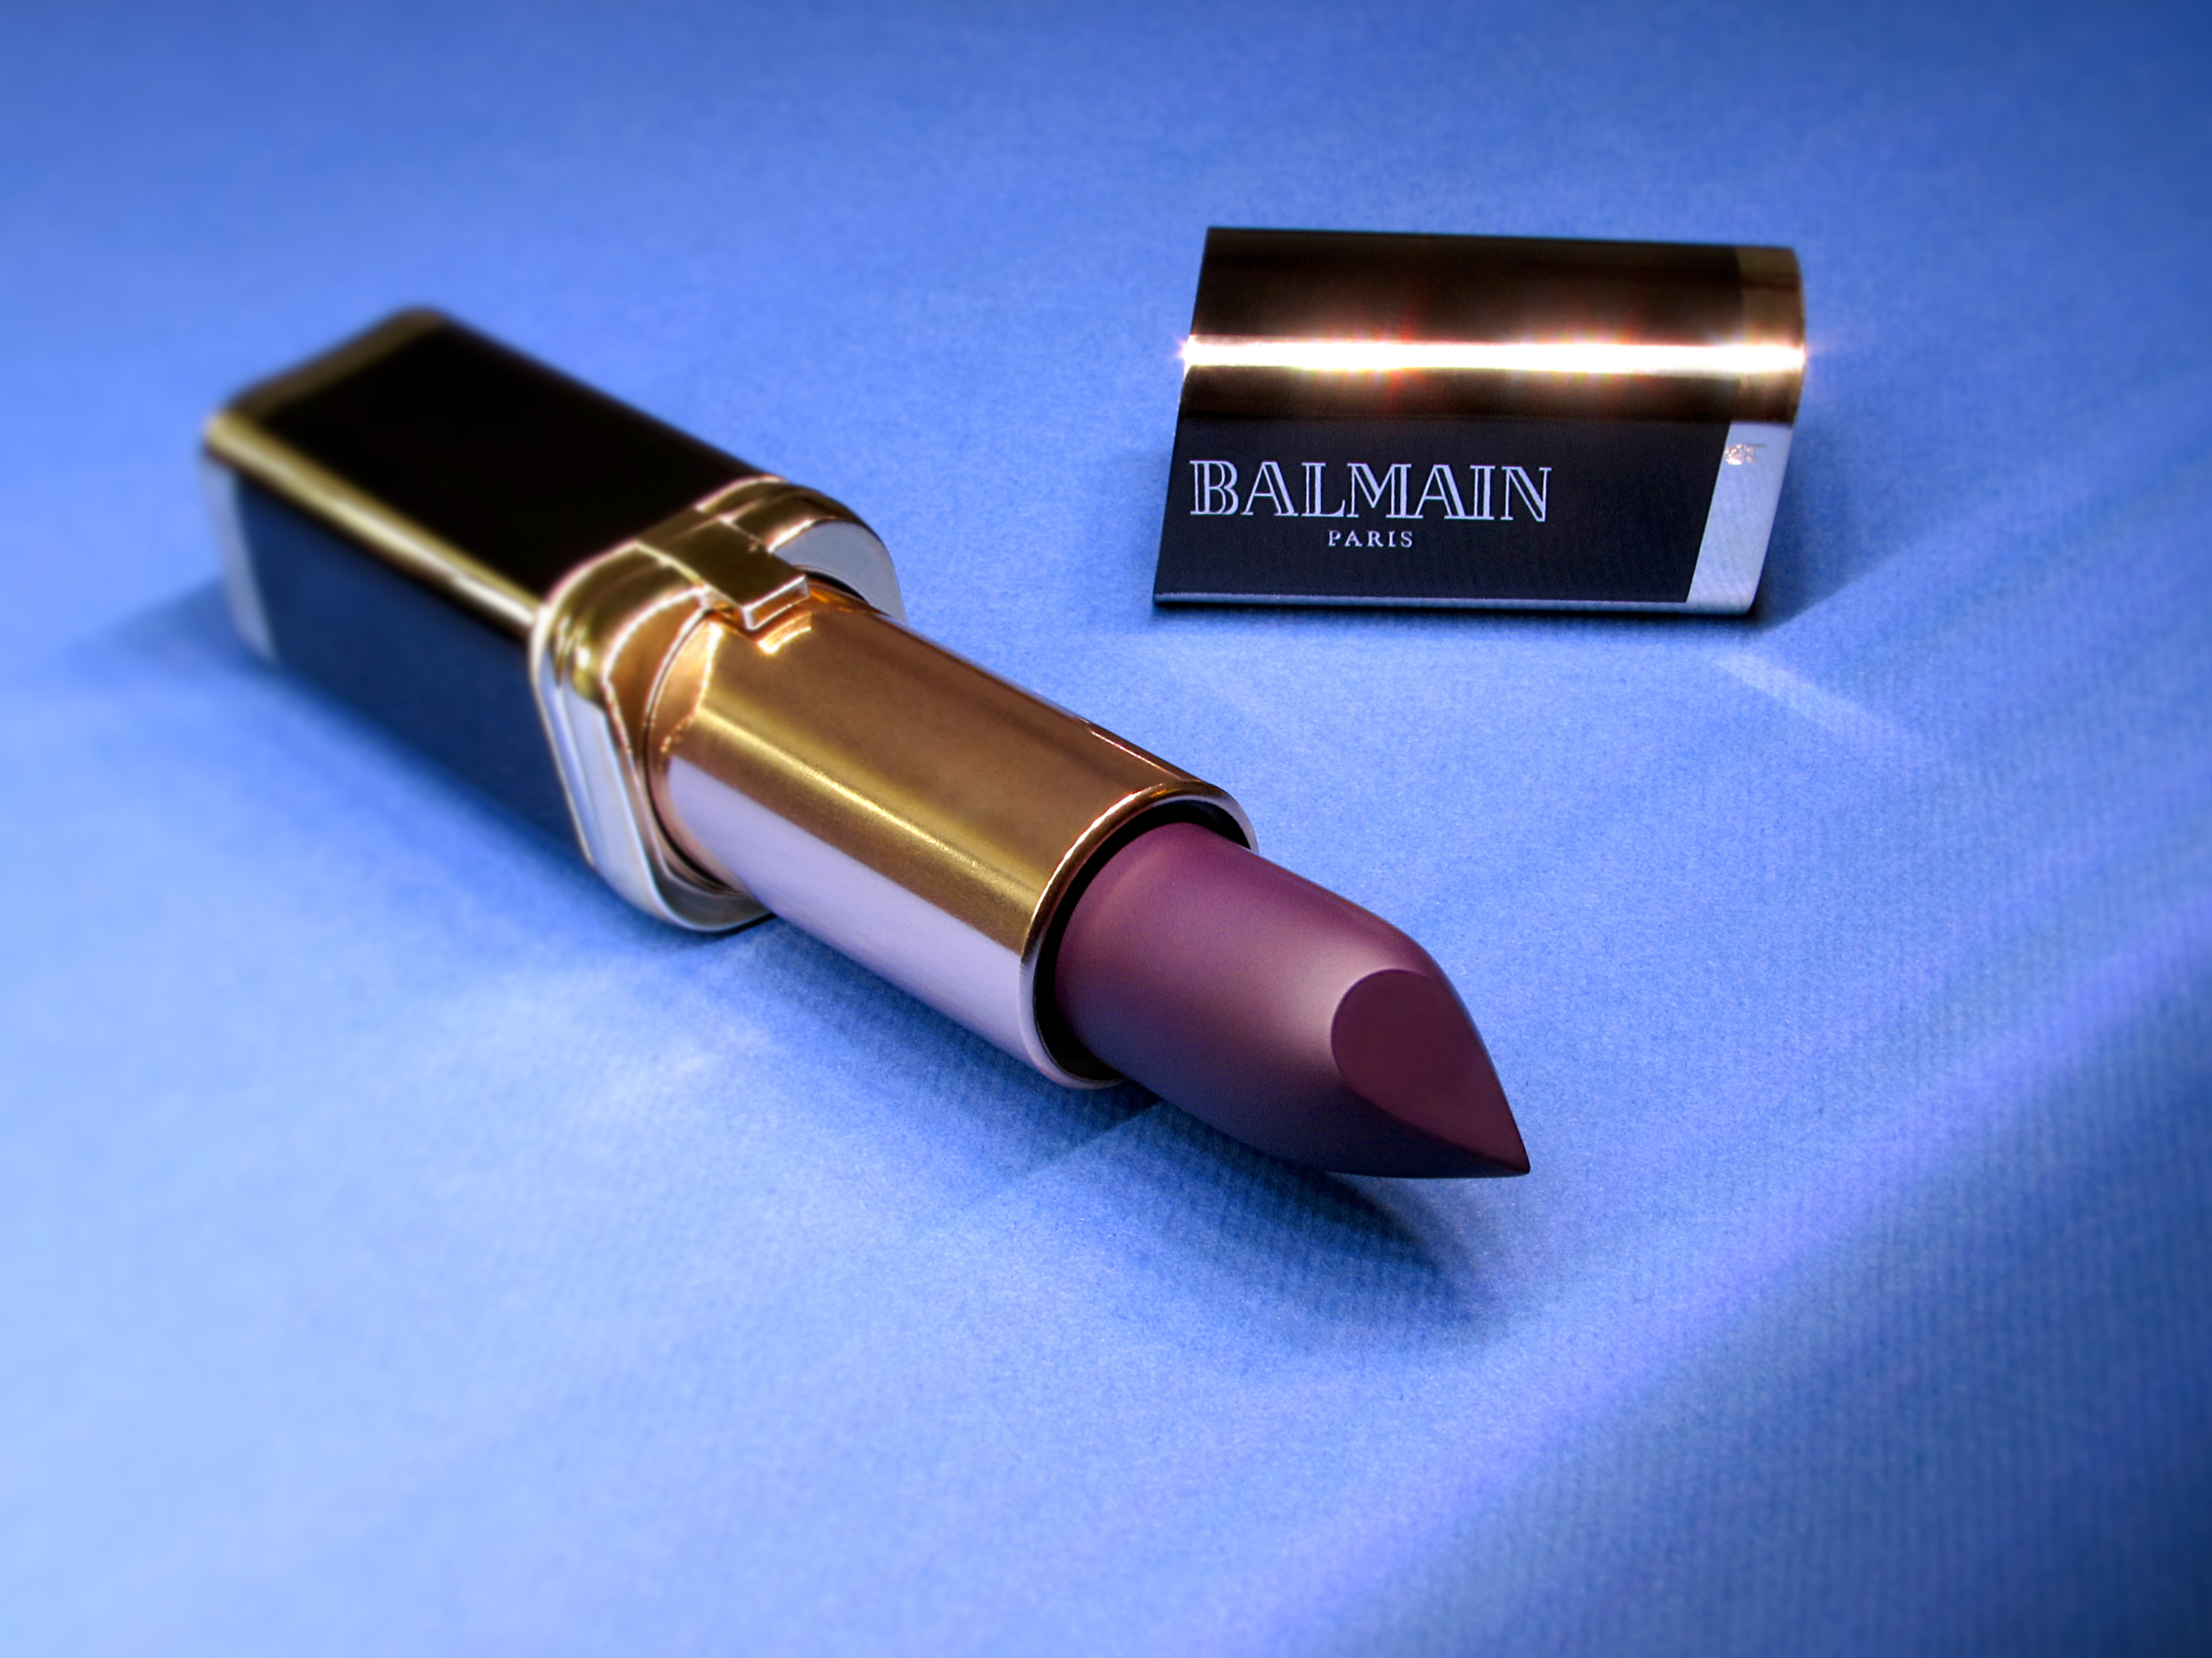 L’Oréal Paris x Balmain Color Riche limited edition purple lipstick in 468 Liberation opened on a blue background.